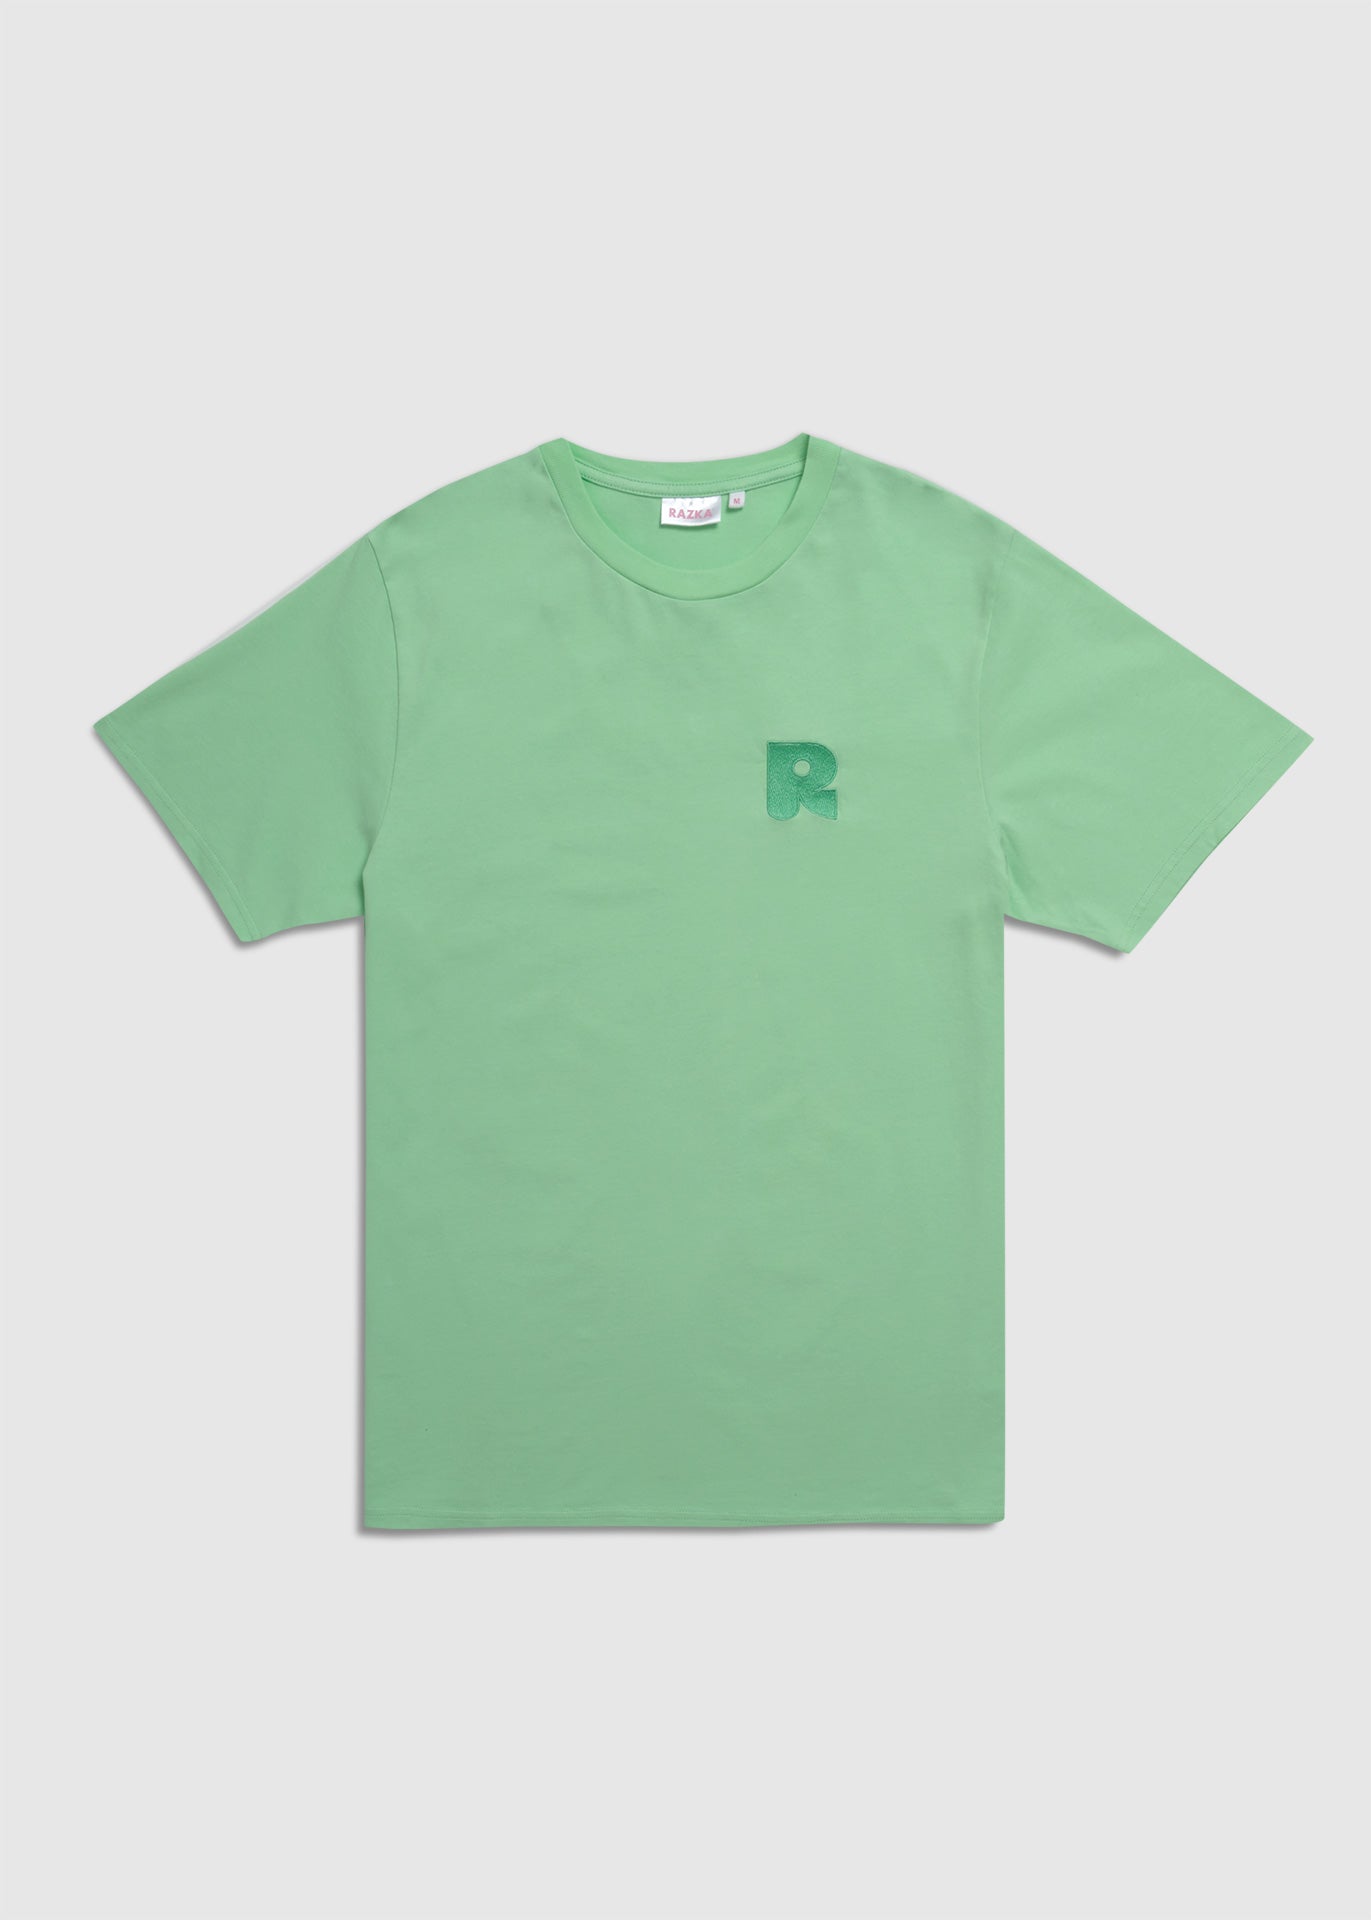 The Green t-shirt